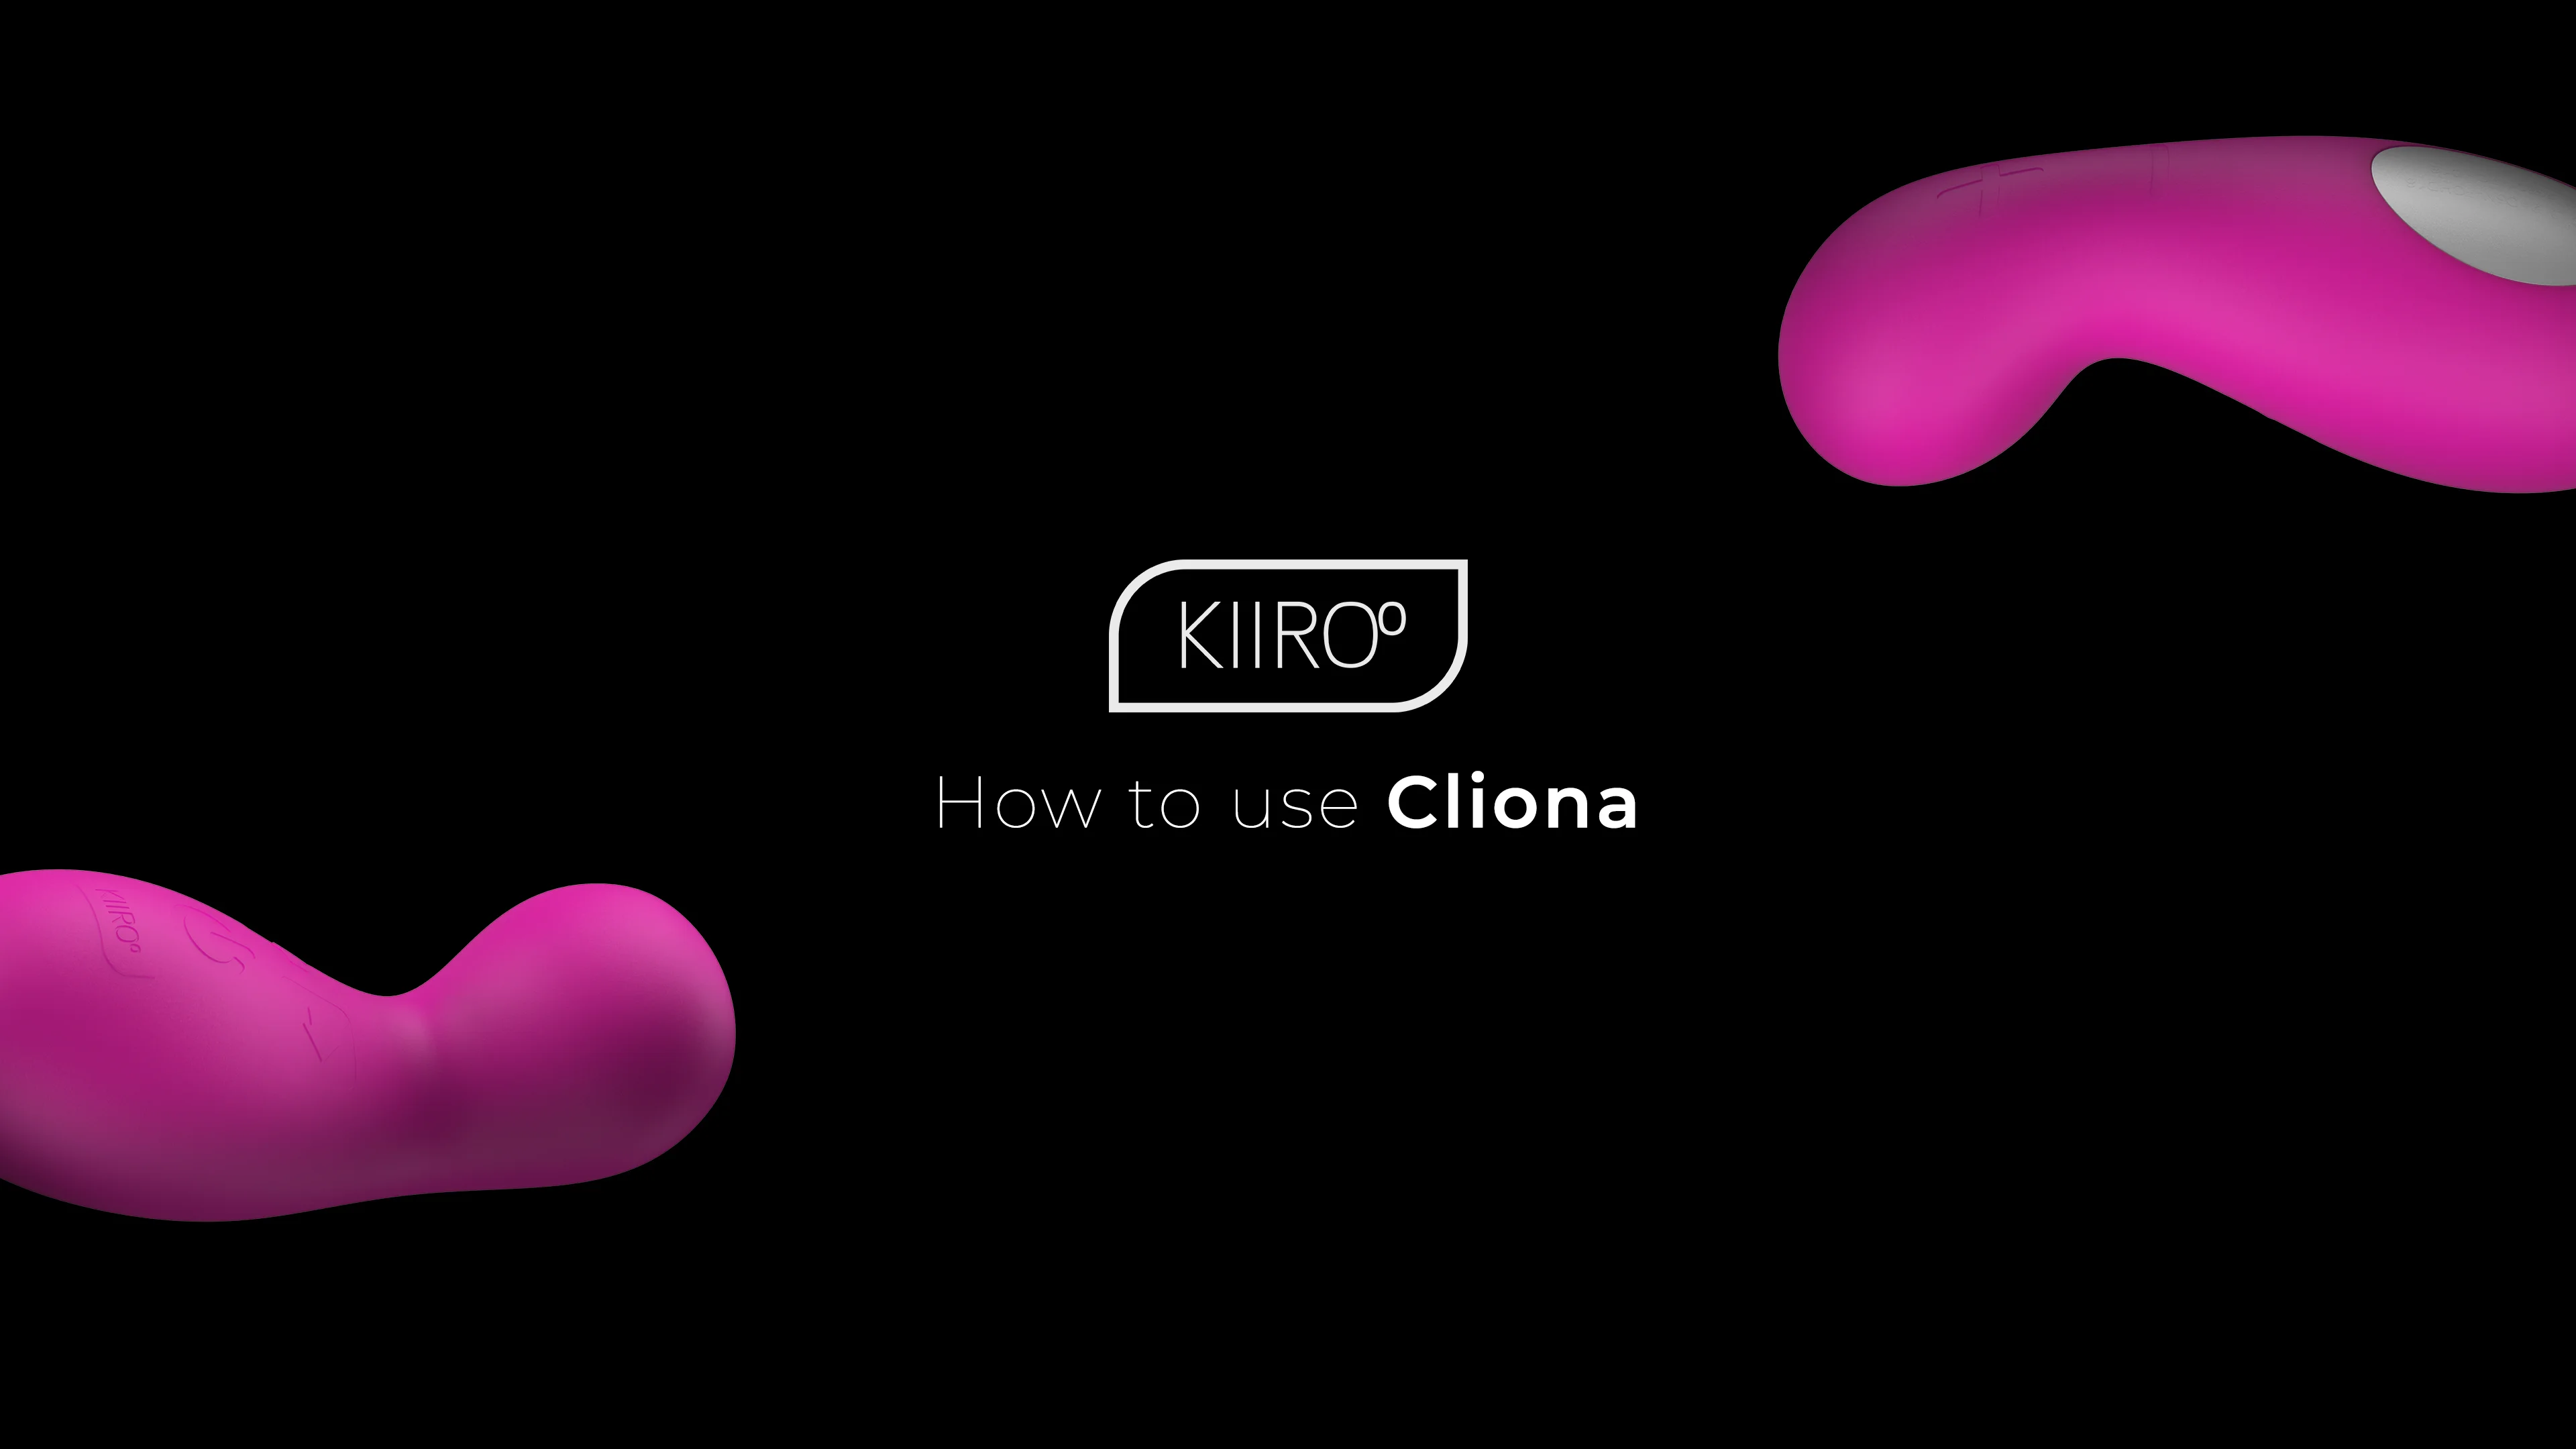 How to use the Keon by Kiiroo - Visual Manual on Vimeo